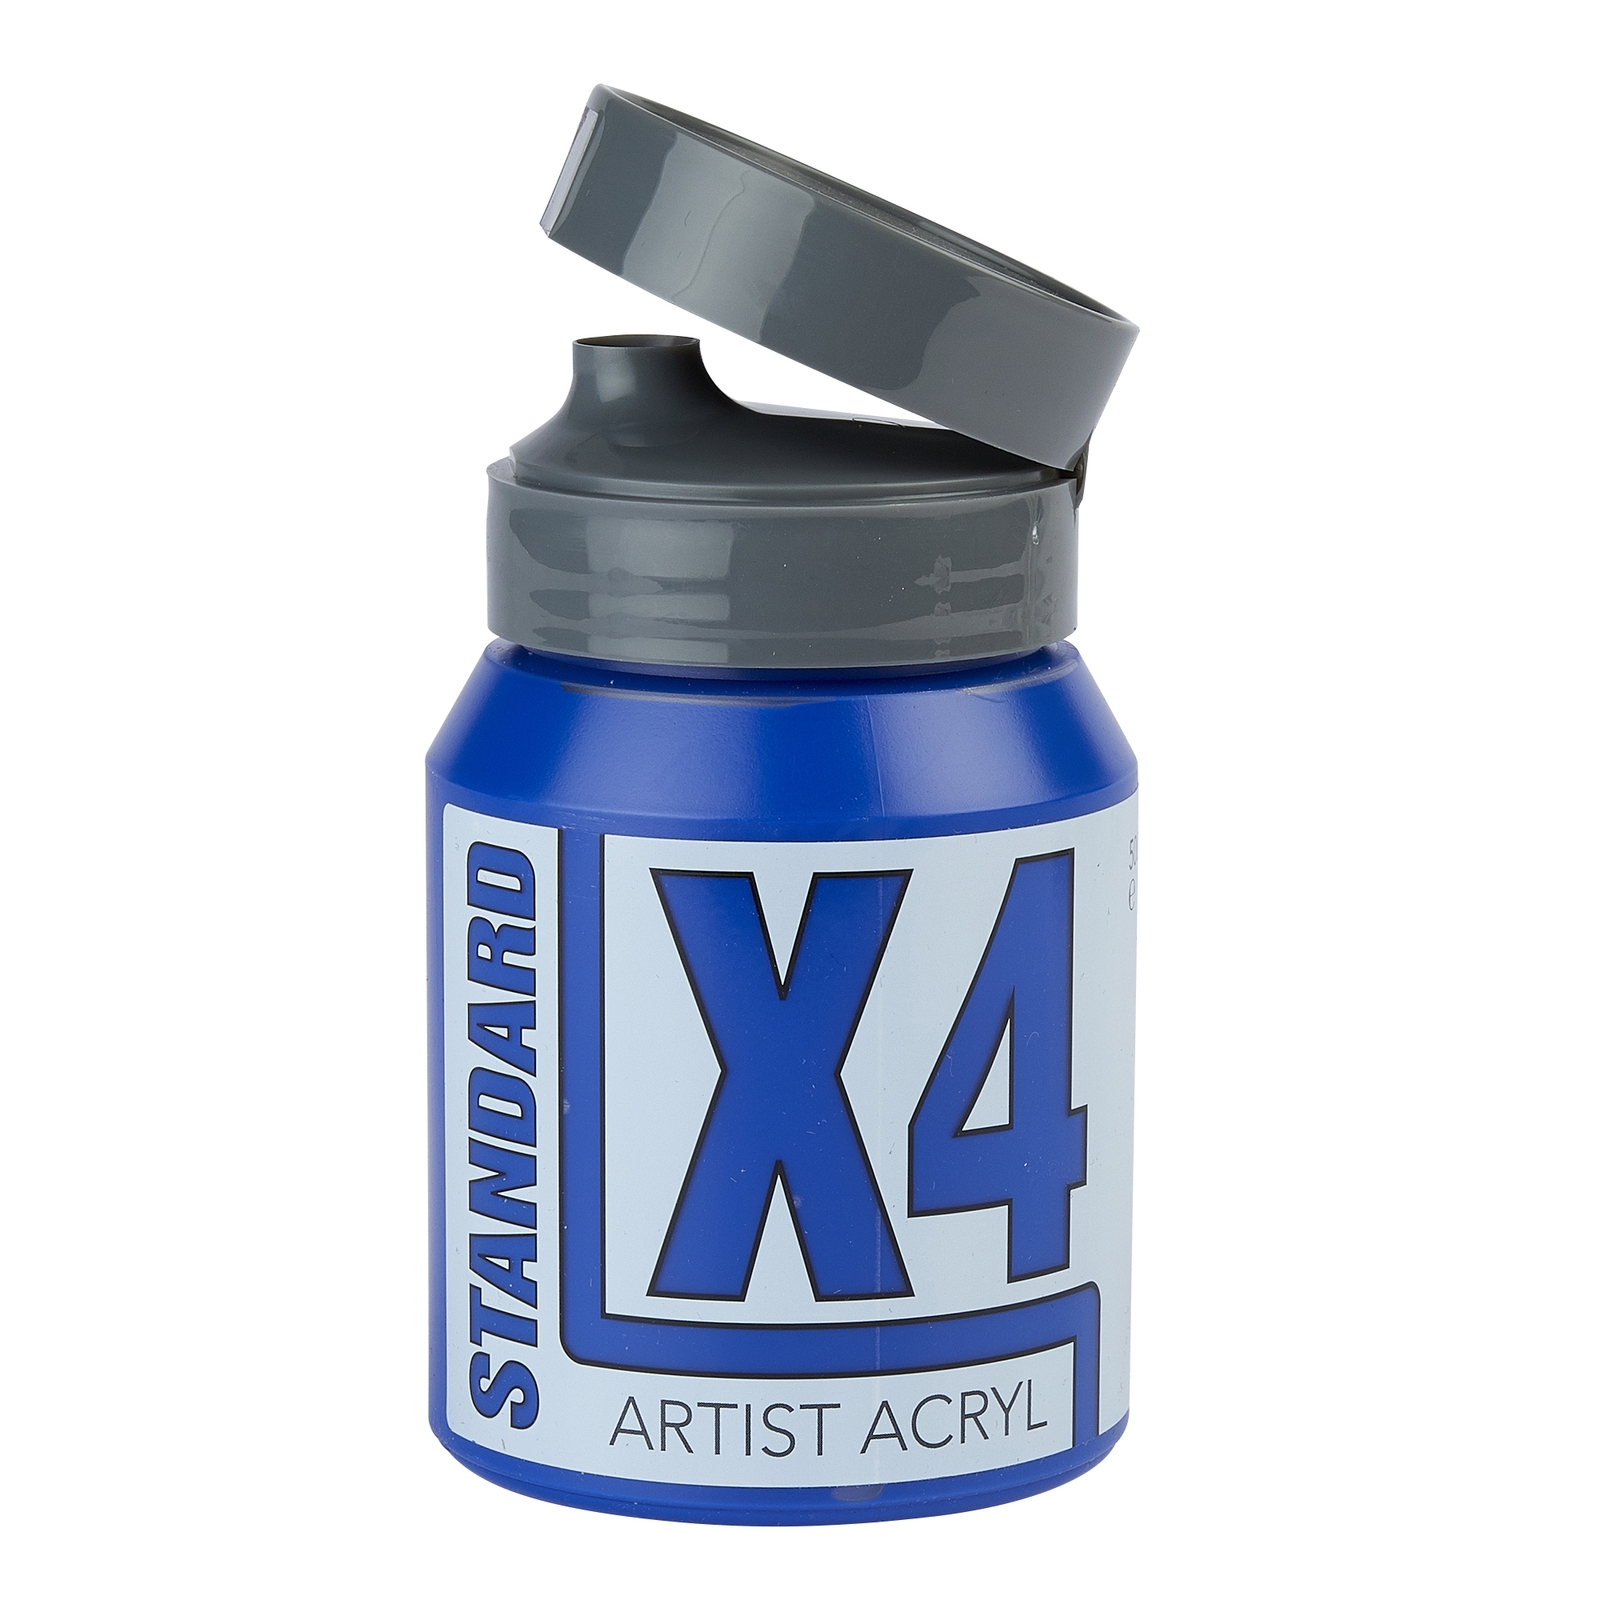 Specialist Crafts X4 Standard Phthalo Blue Acryl/Acrylic Paint - 500ml - Each